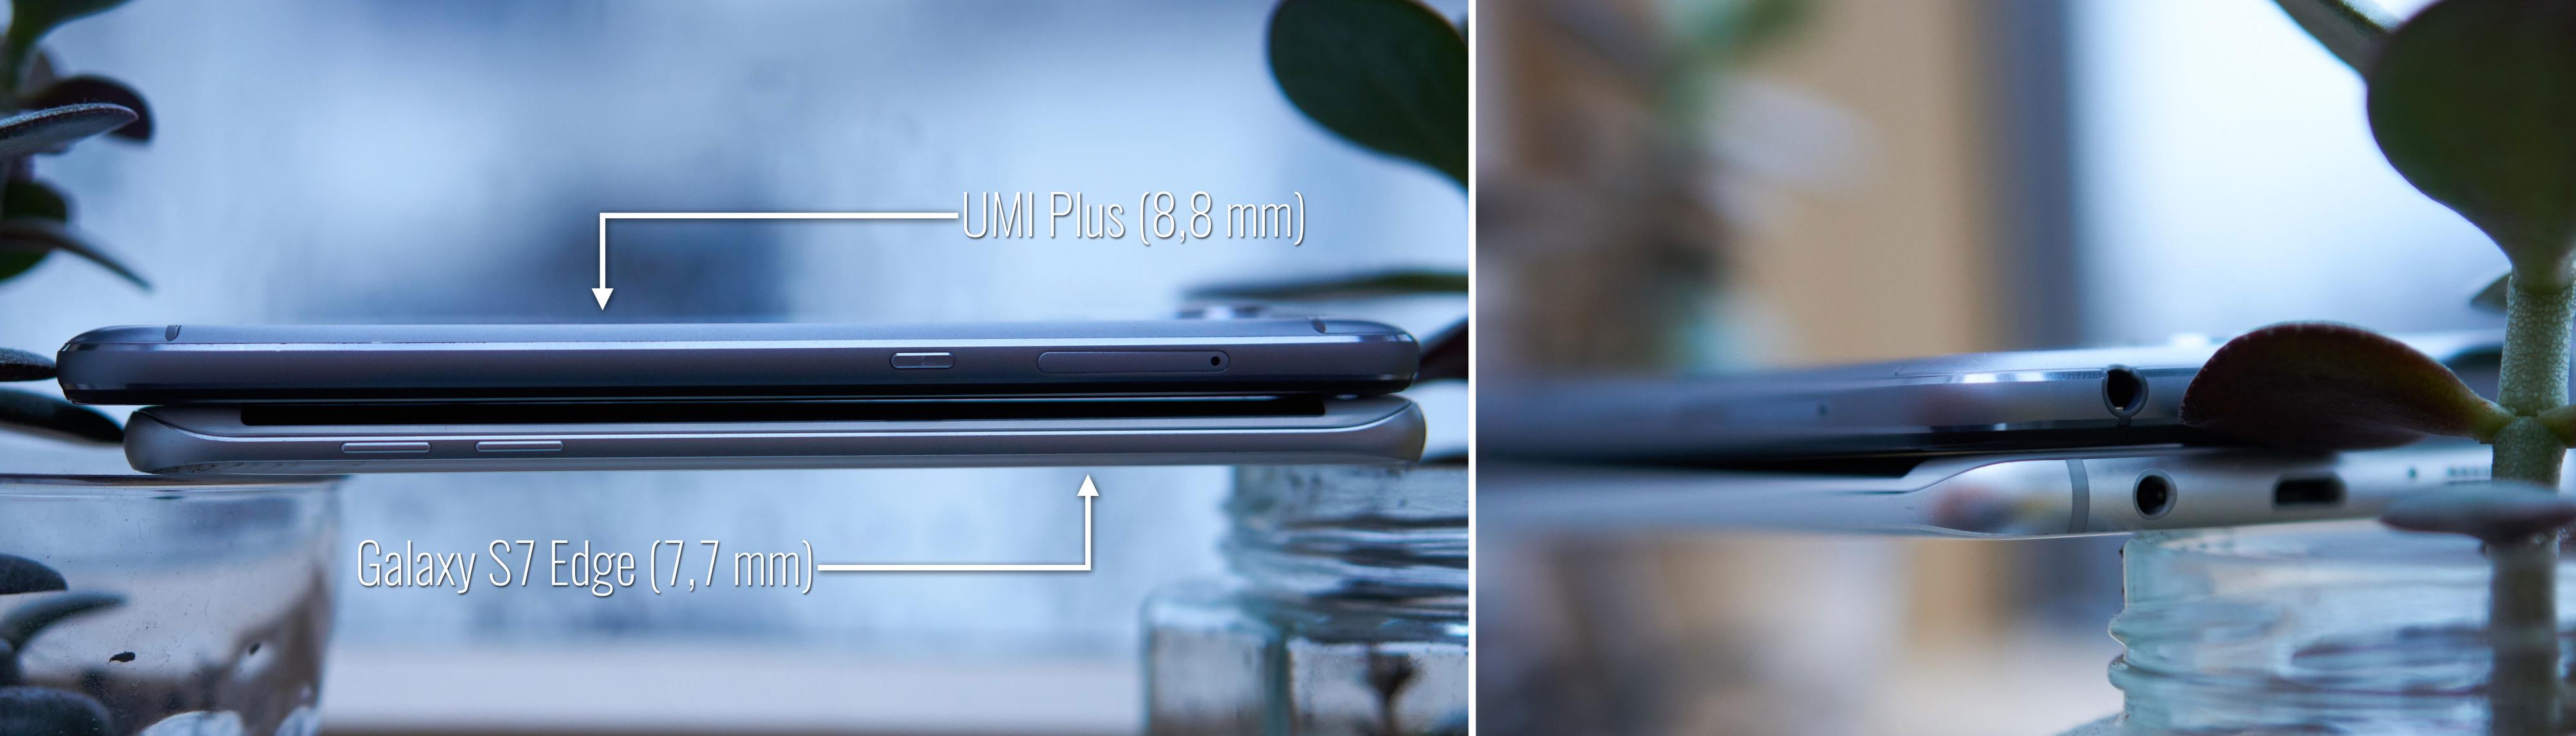 UMi Plus sammenlignet med Galaxy S7 Edge.